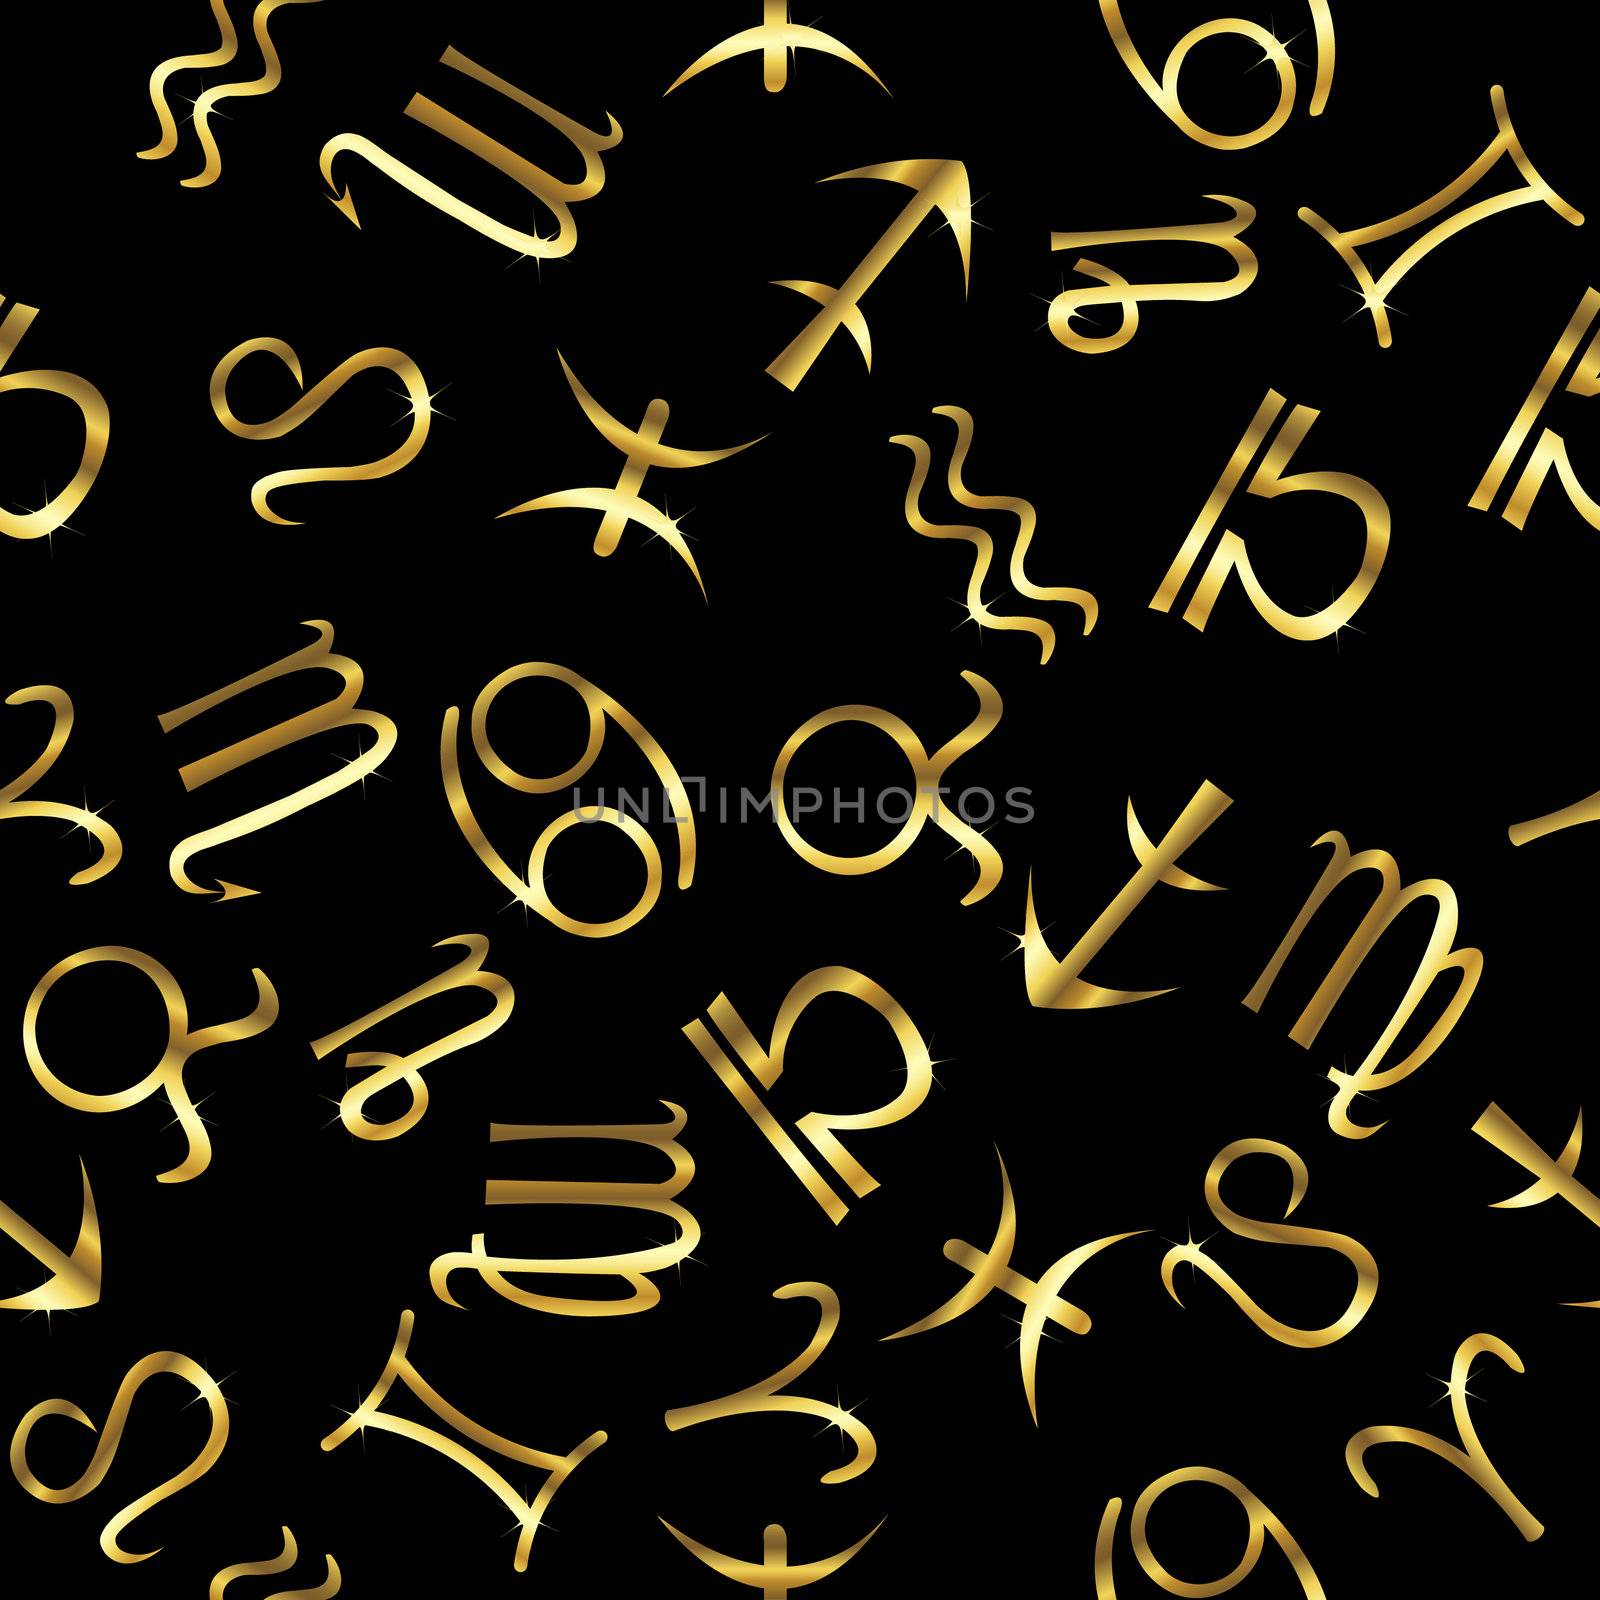 Golden zodiacal signs over black background